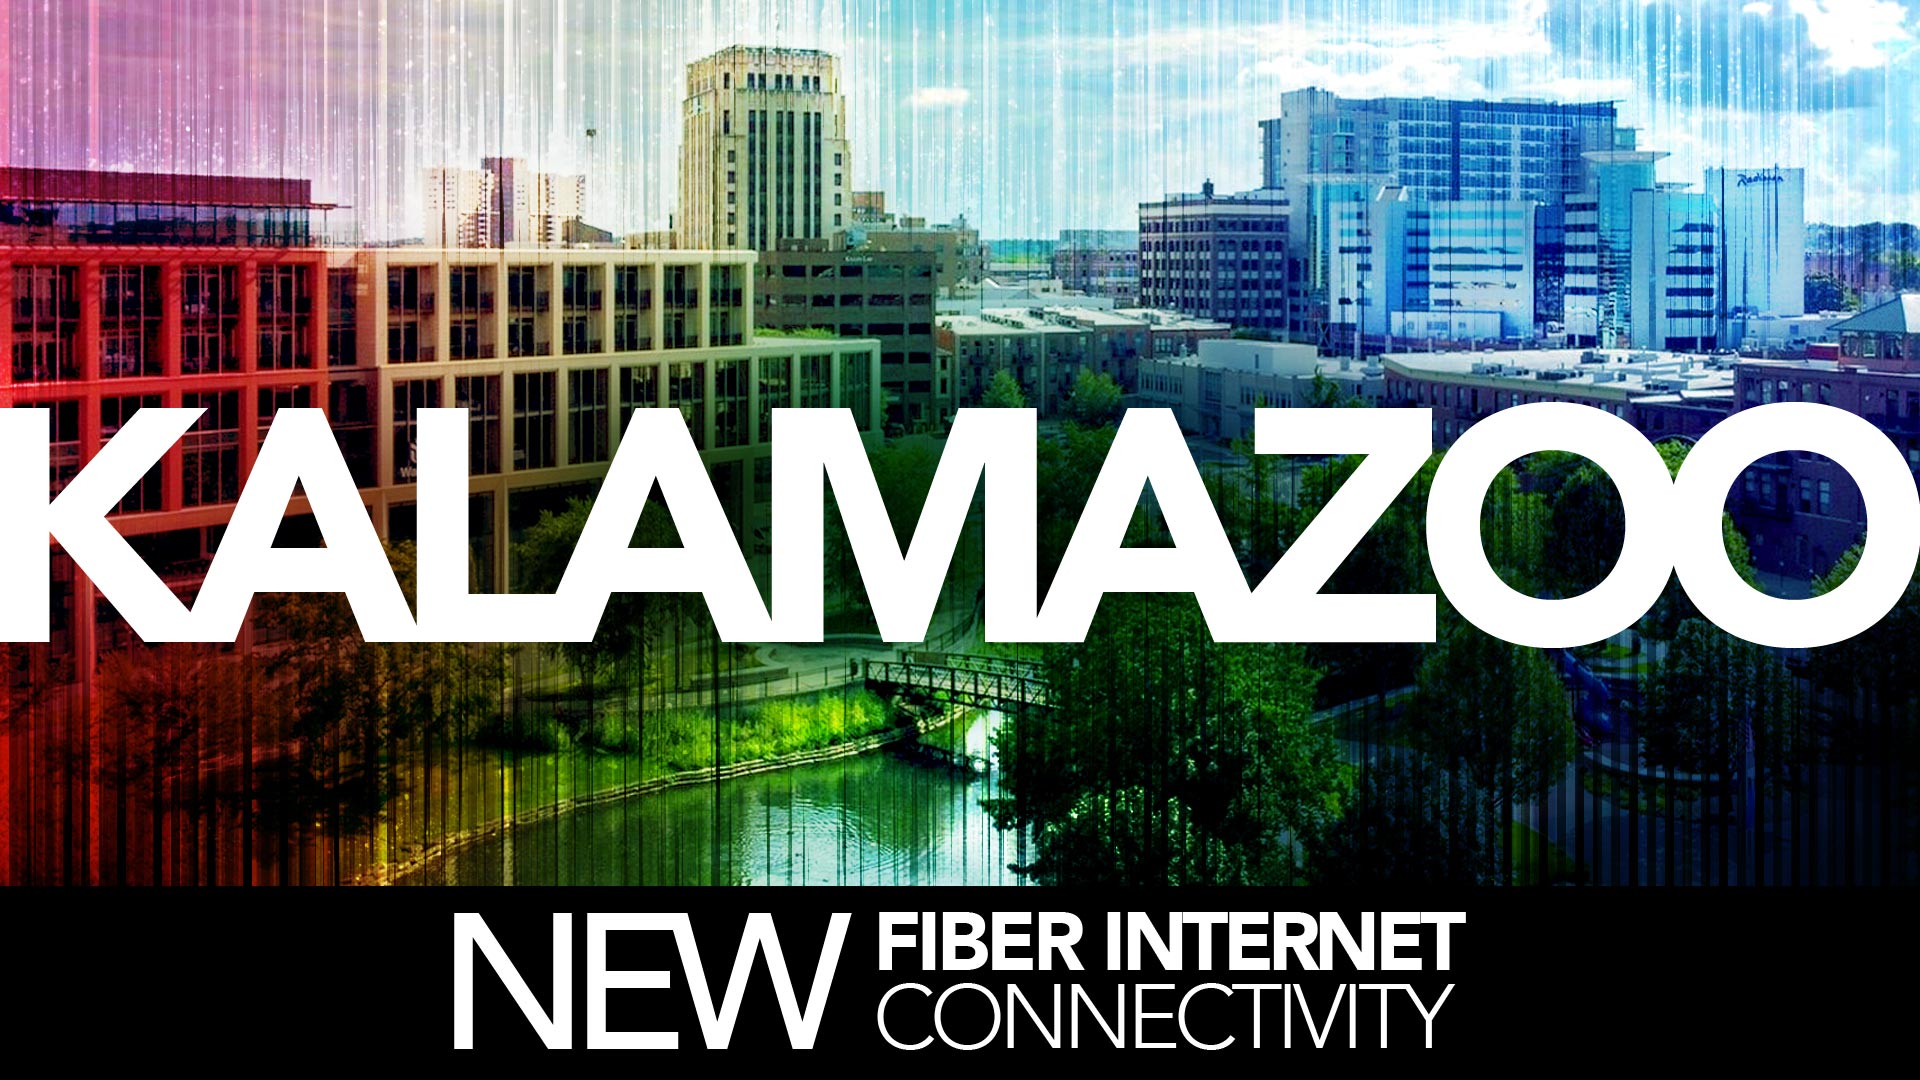 123NET Providing New Fiber Internet Connectivity in Kalamazoo, Michigan